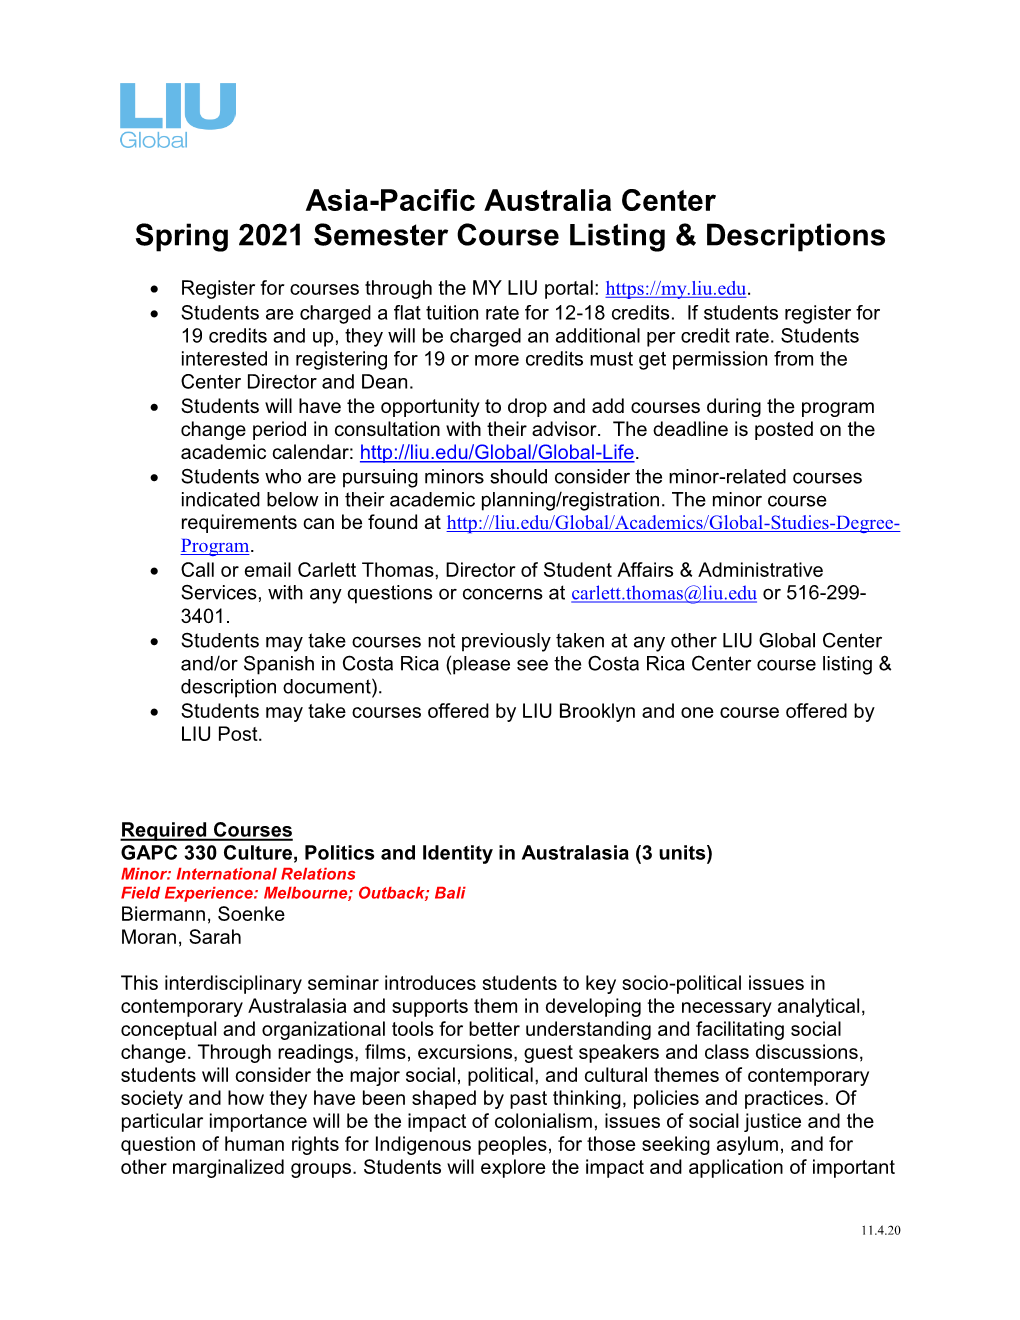 Asia-Pacific Australia Course Listings and Descriptions SP21